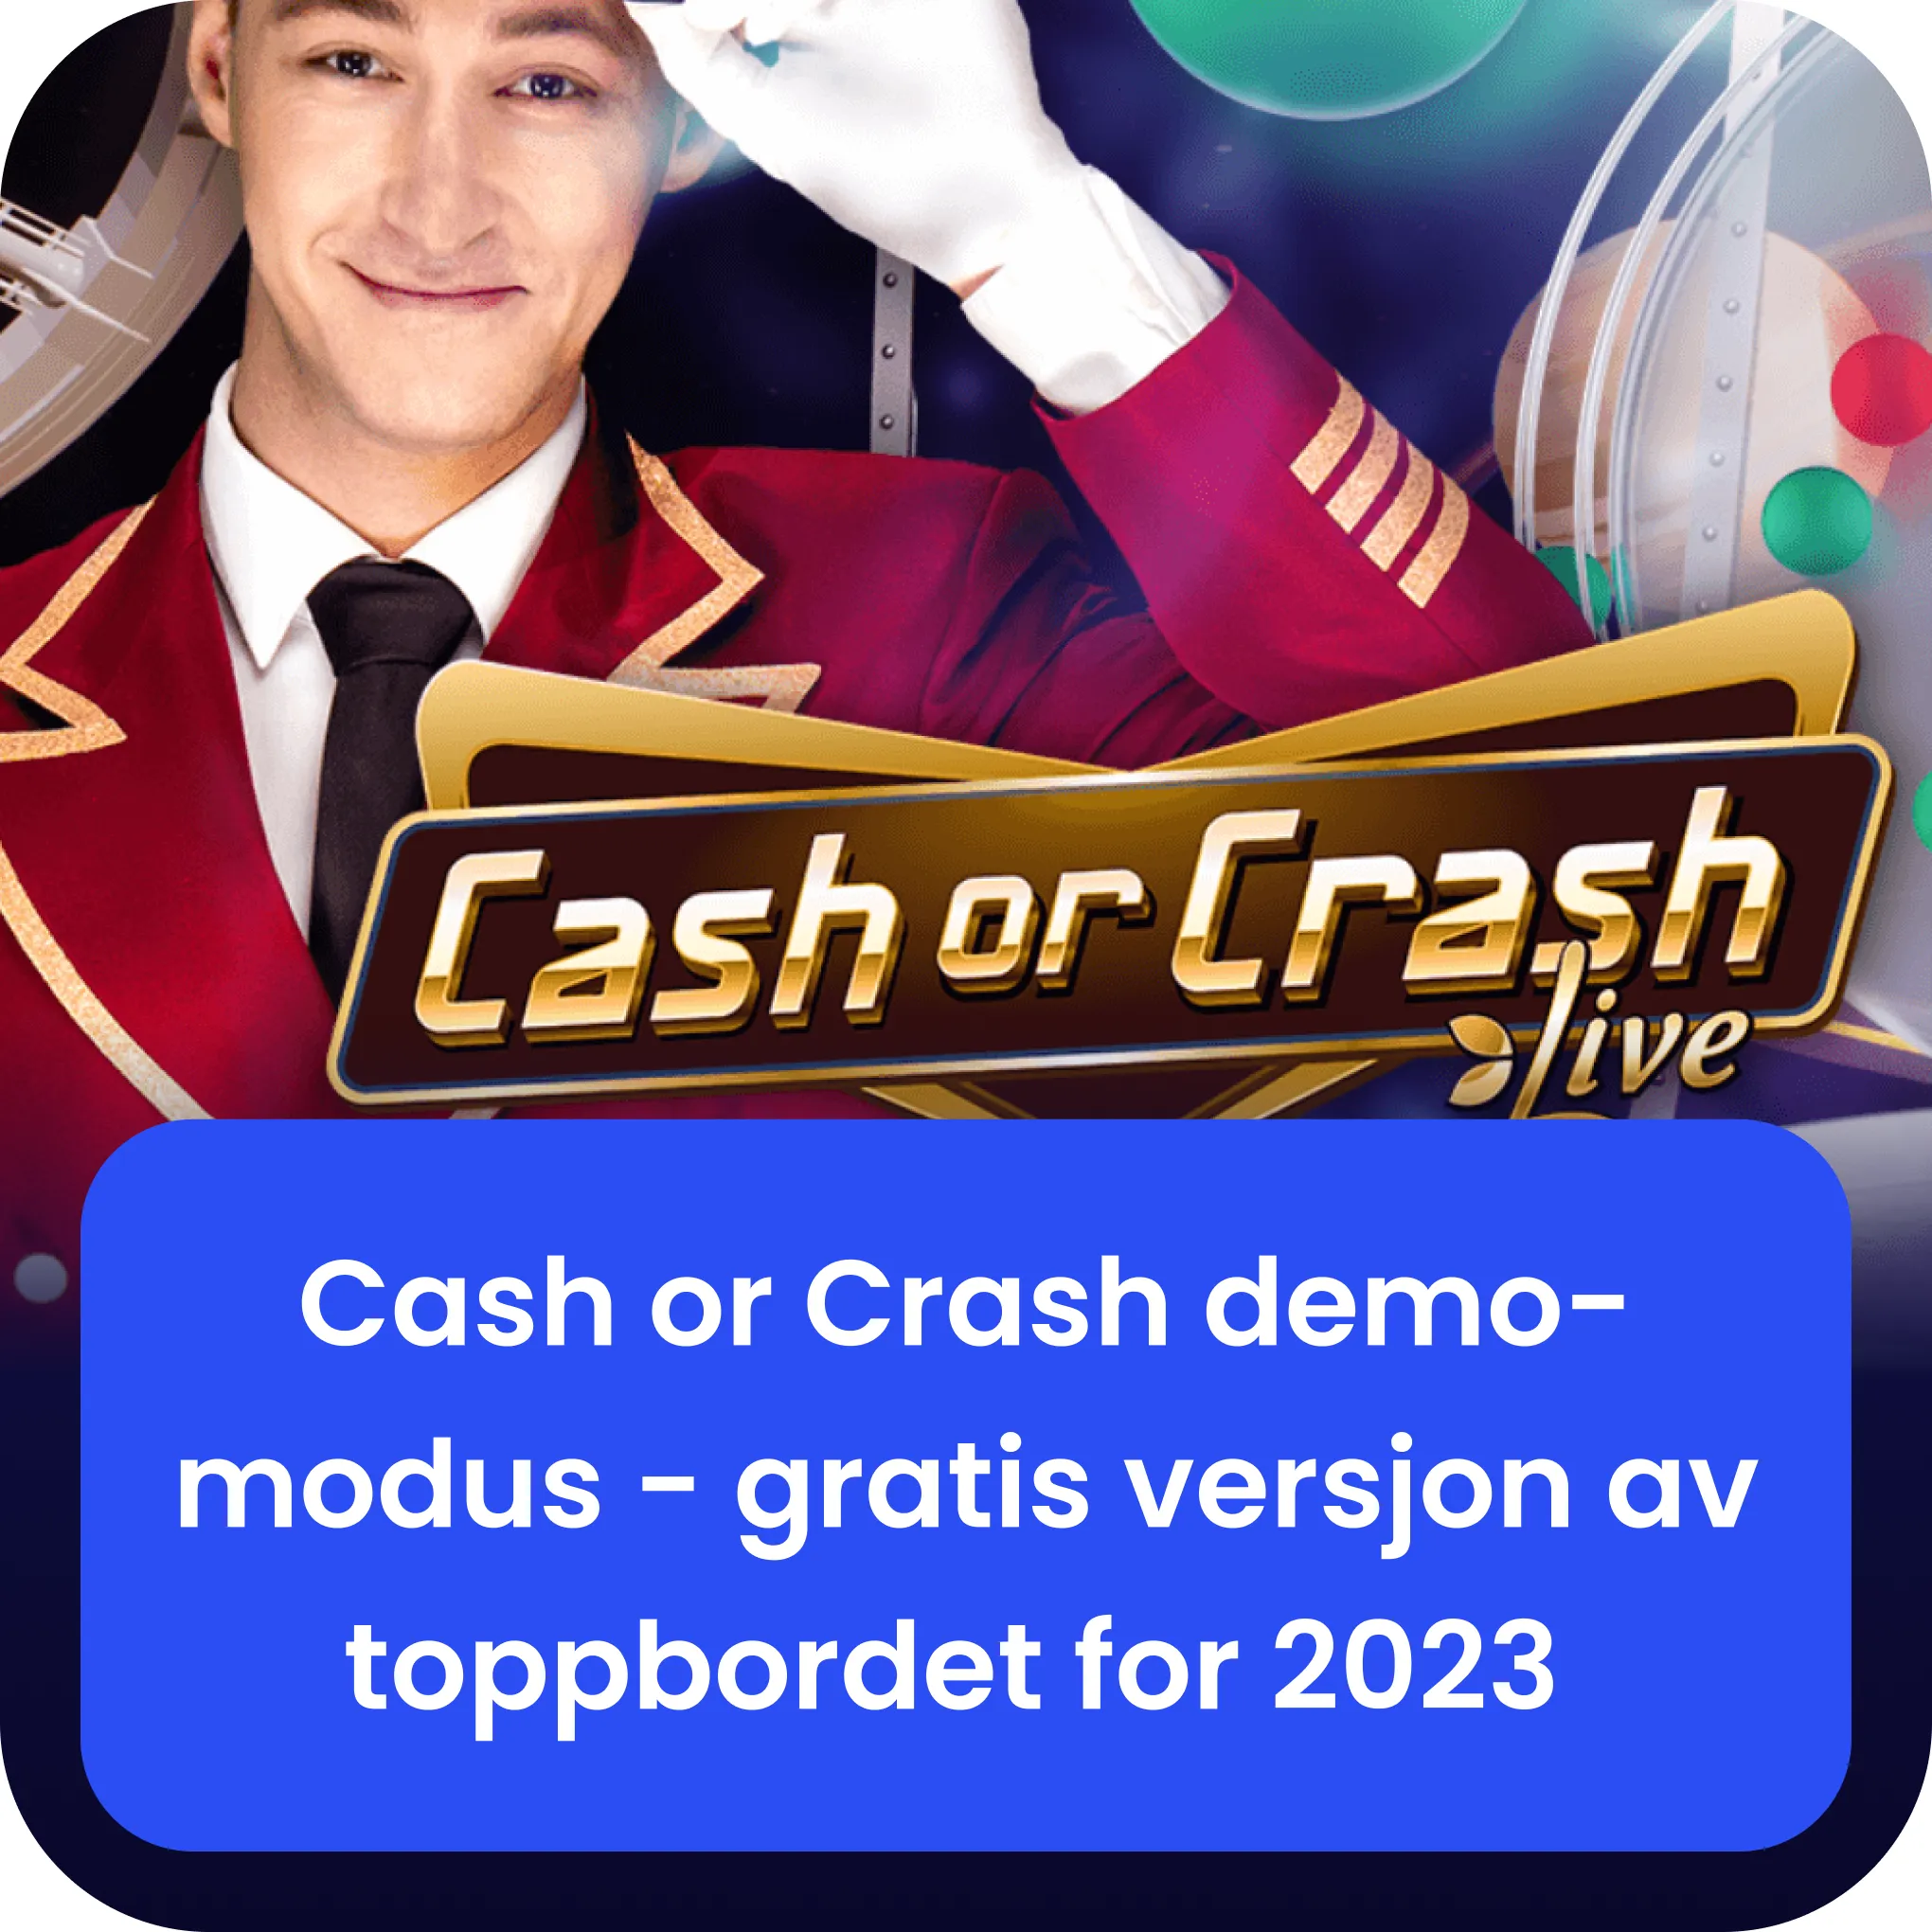 Cash or Crash demo-modus